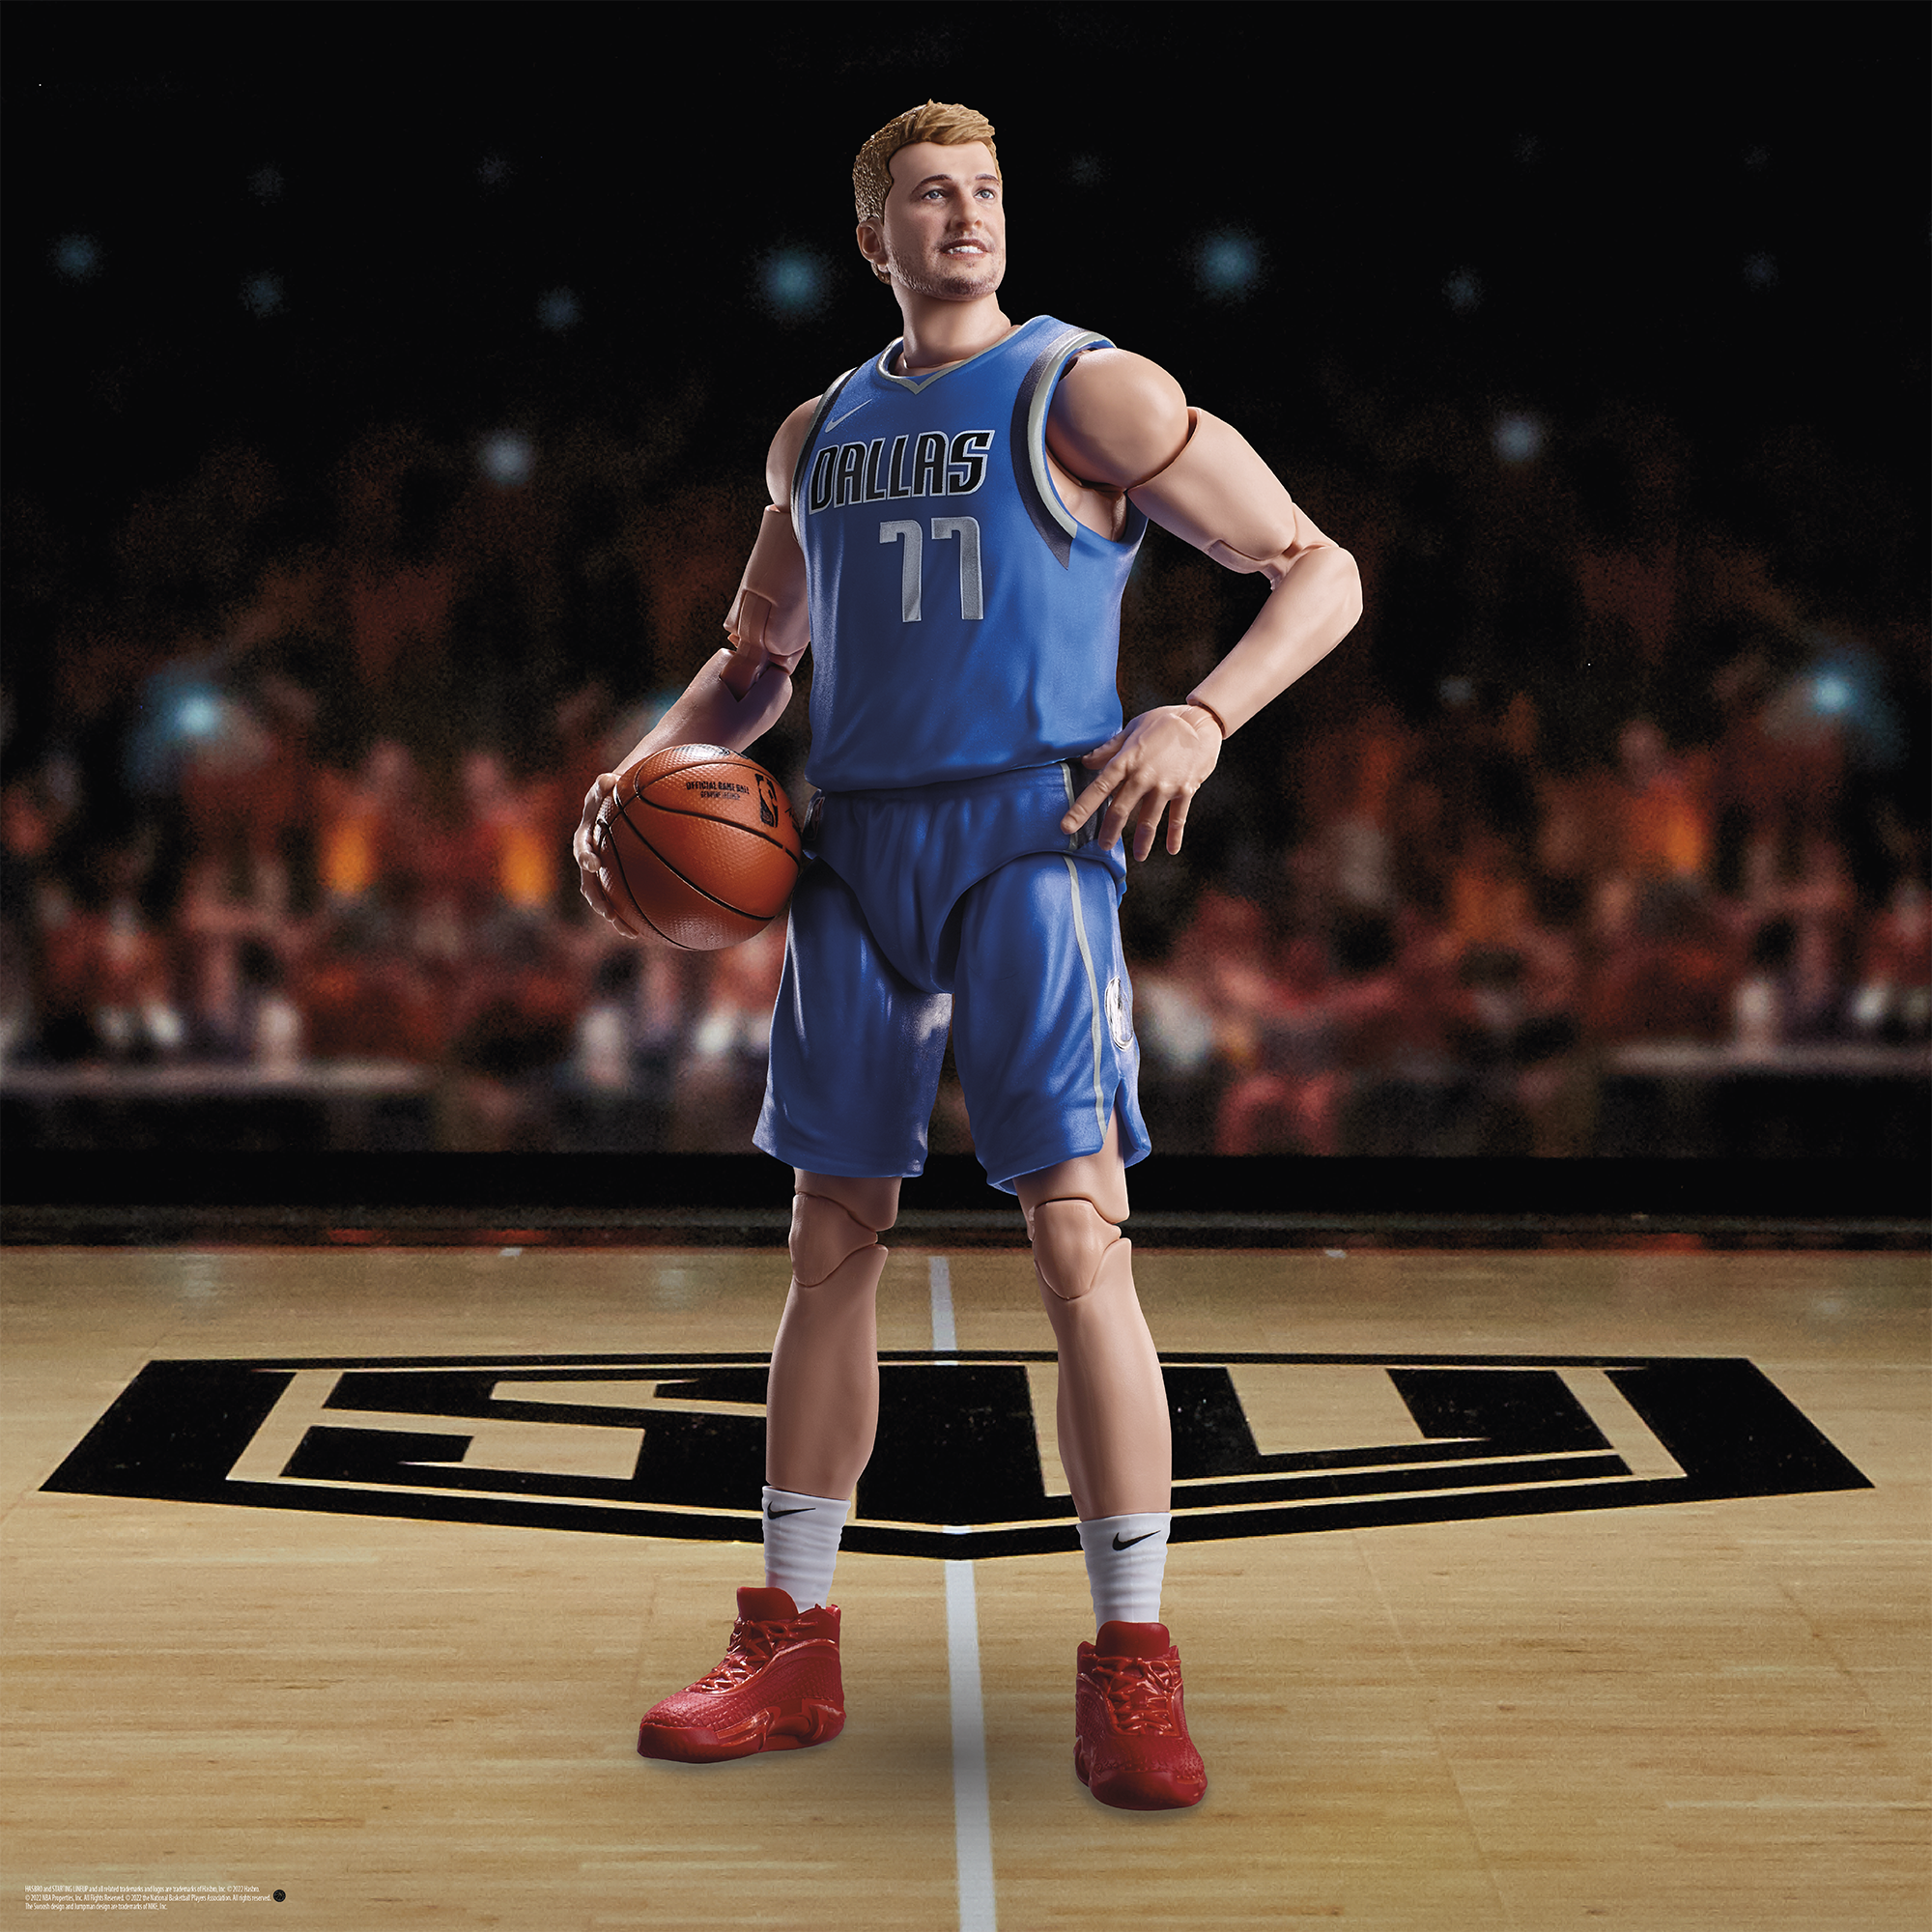 Luka Doncic Dallas Mavericks 35x43 Framed Jersey / 2019 NBA